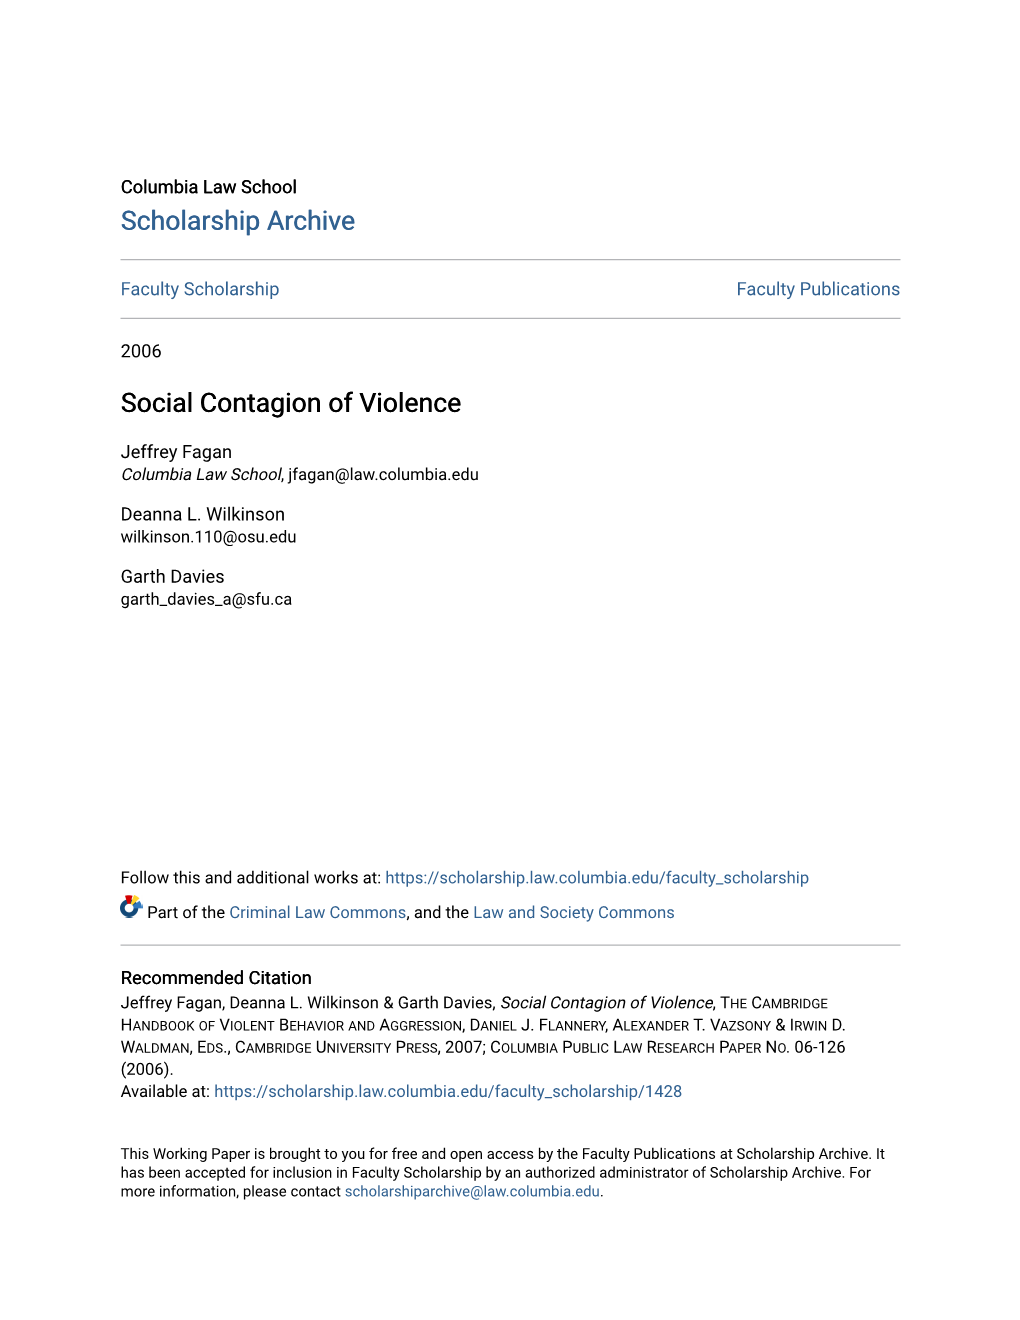 Social Contagion of Violence